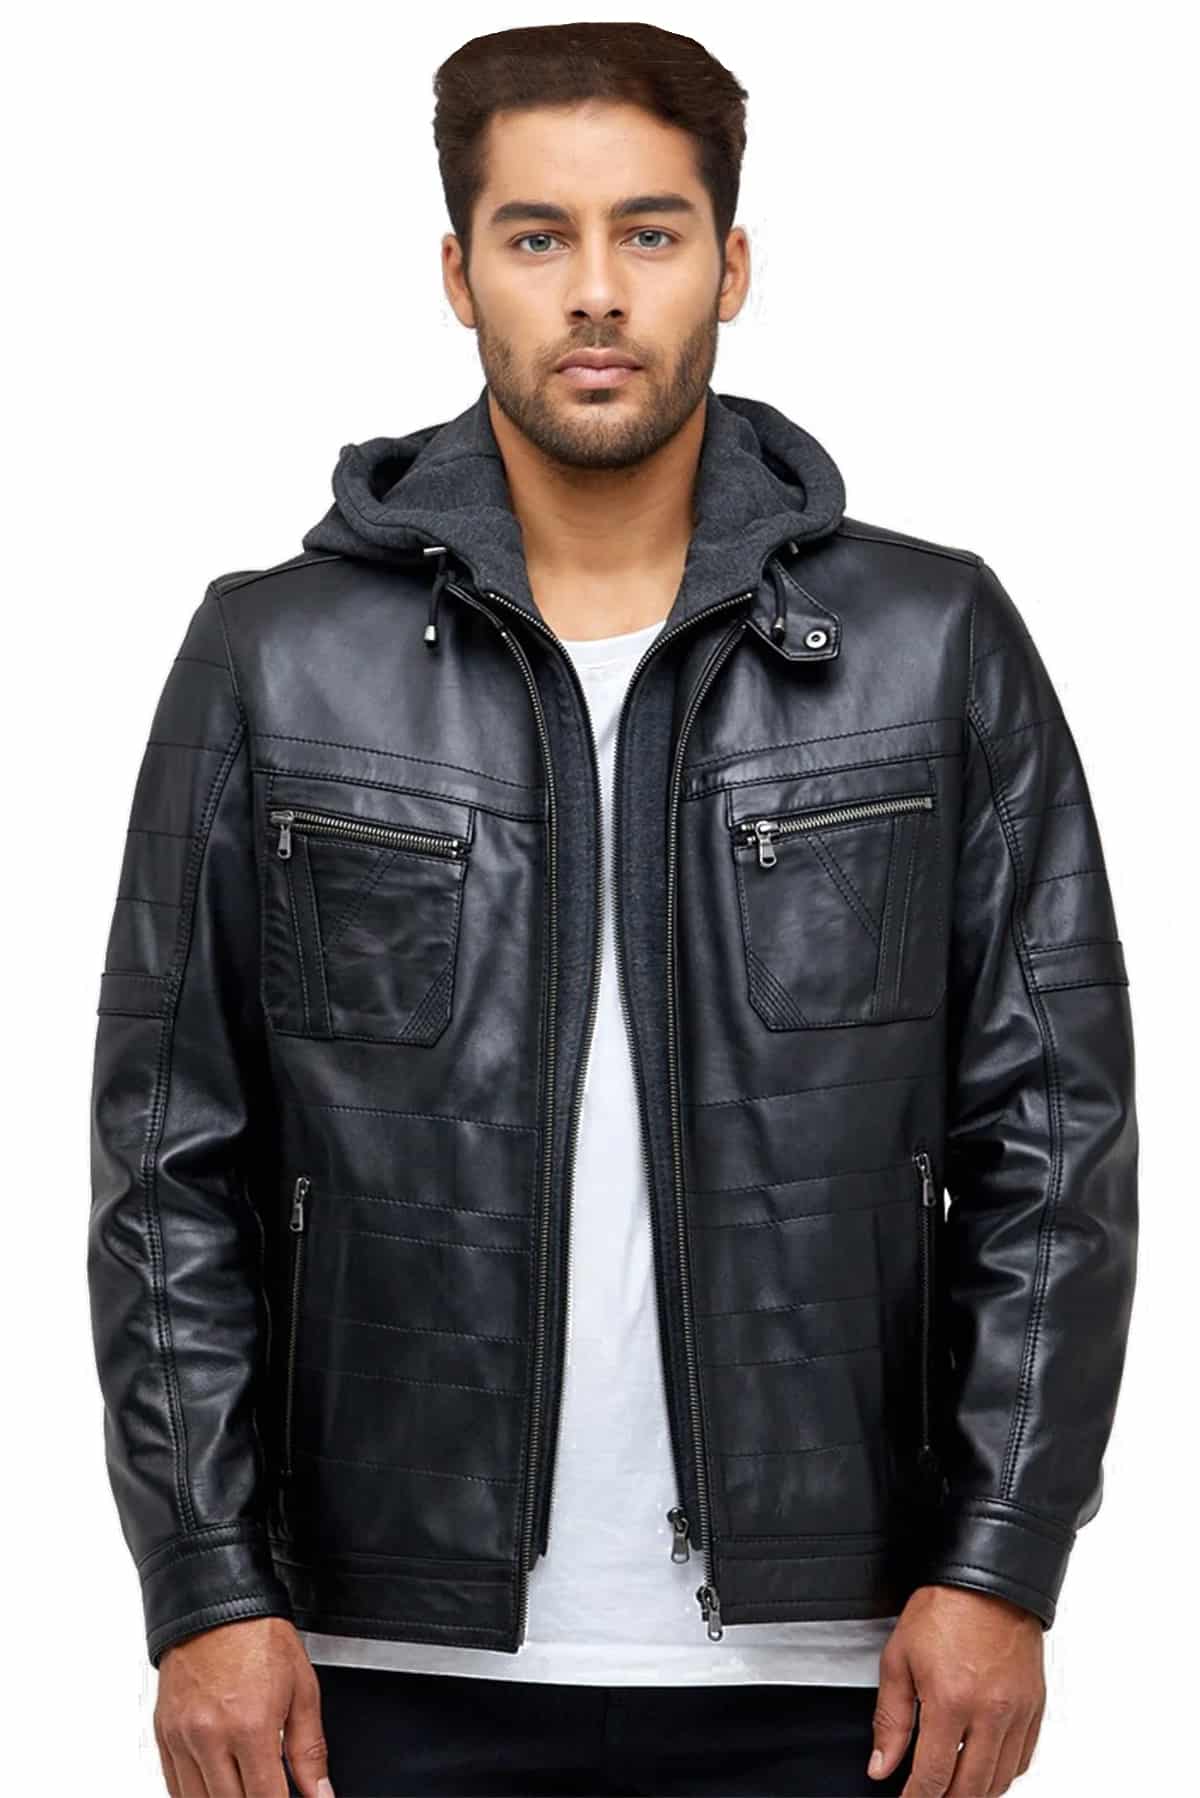 Rhine Classic Men's Black Leather Hoodie Jacket